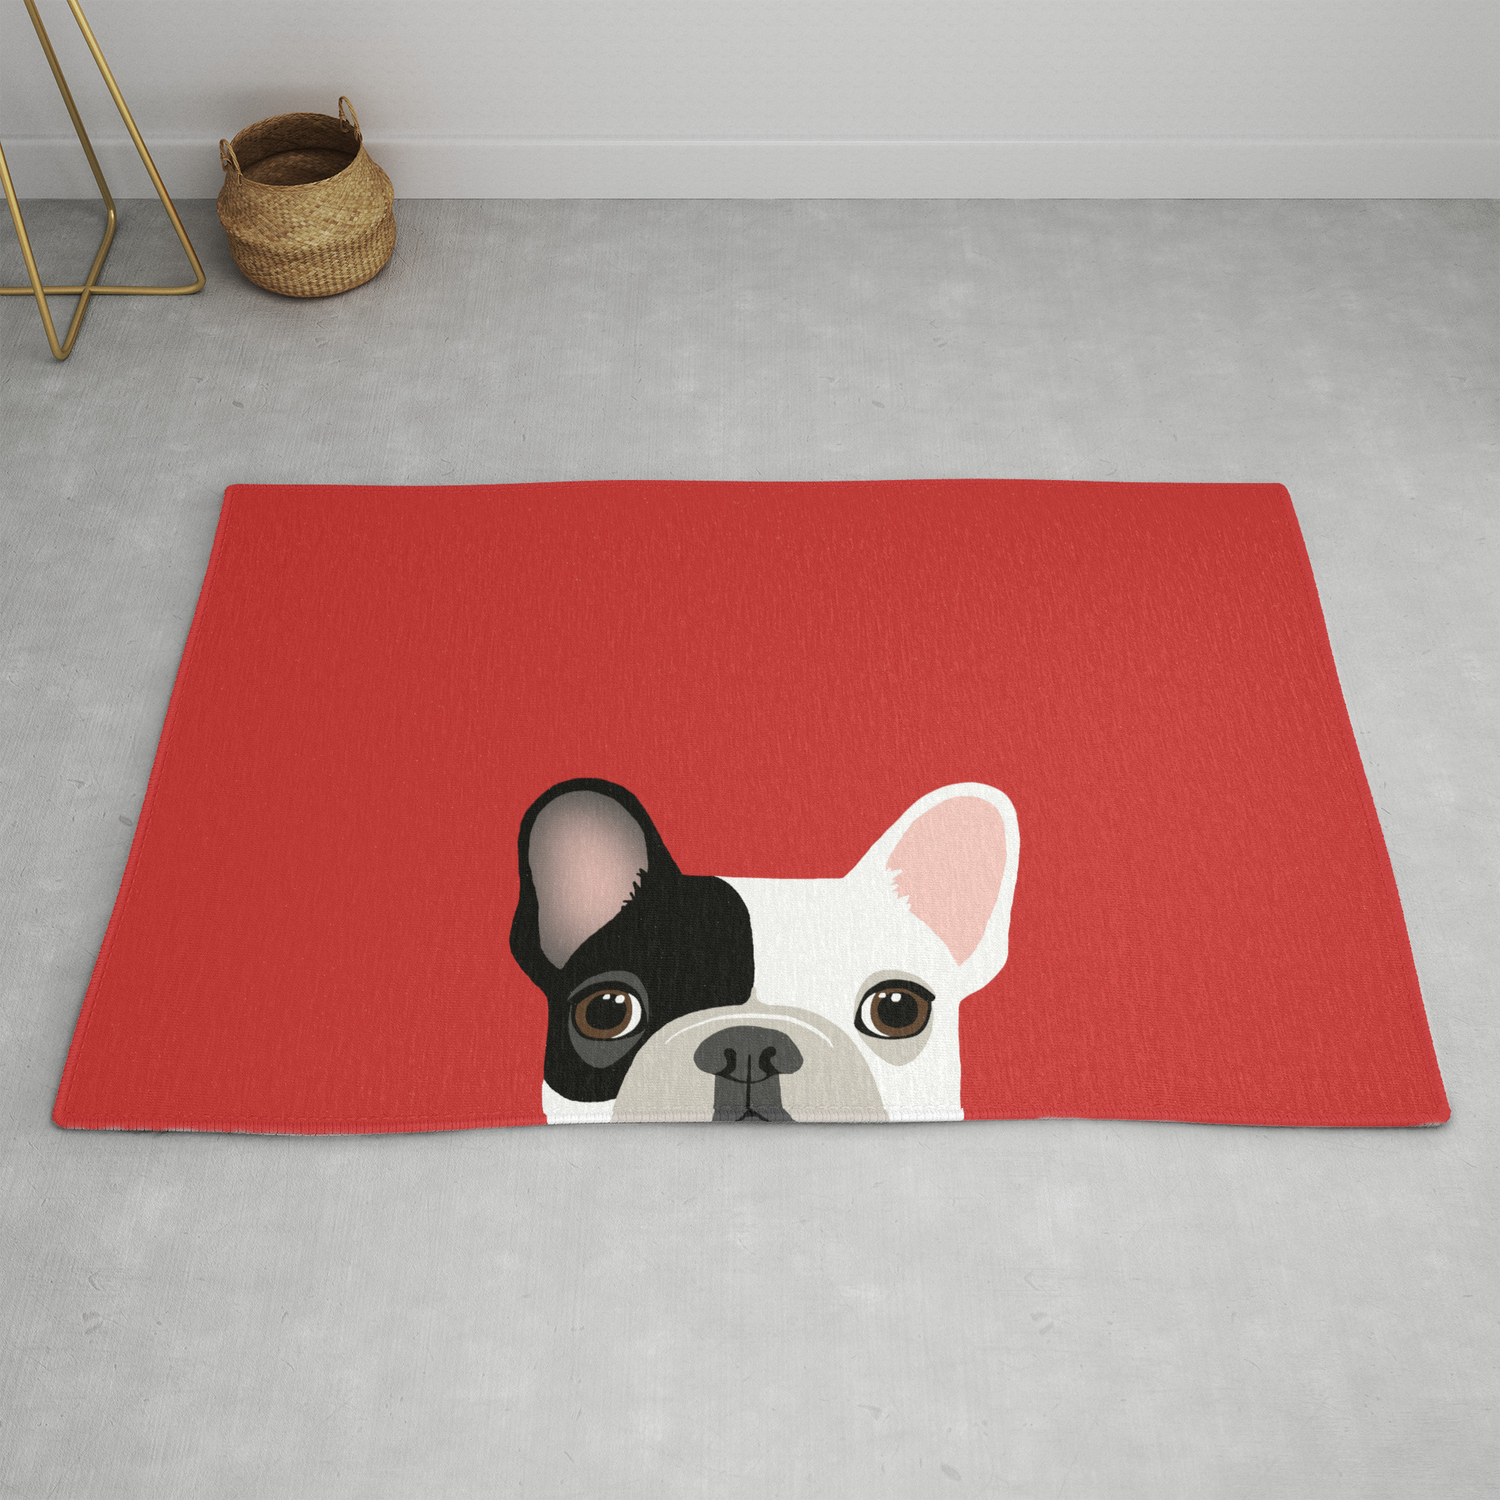 ALAZA Funny French Bulldog Donut Polka Dots Area Rug Rugs for Living Room Bedroom 5'3x4'